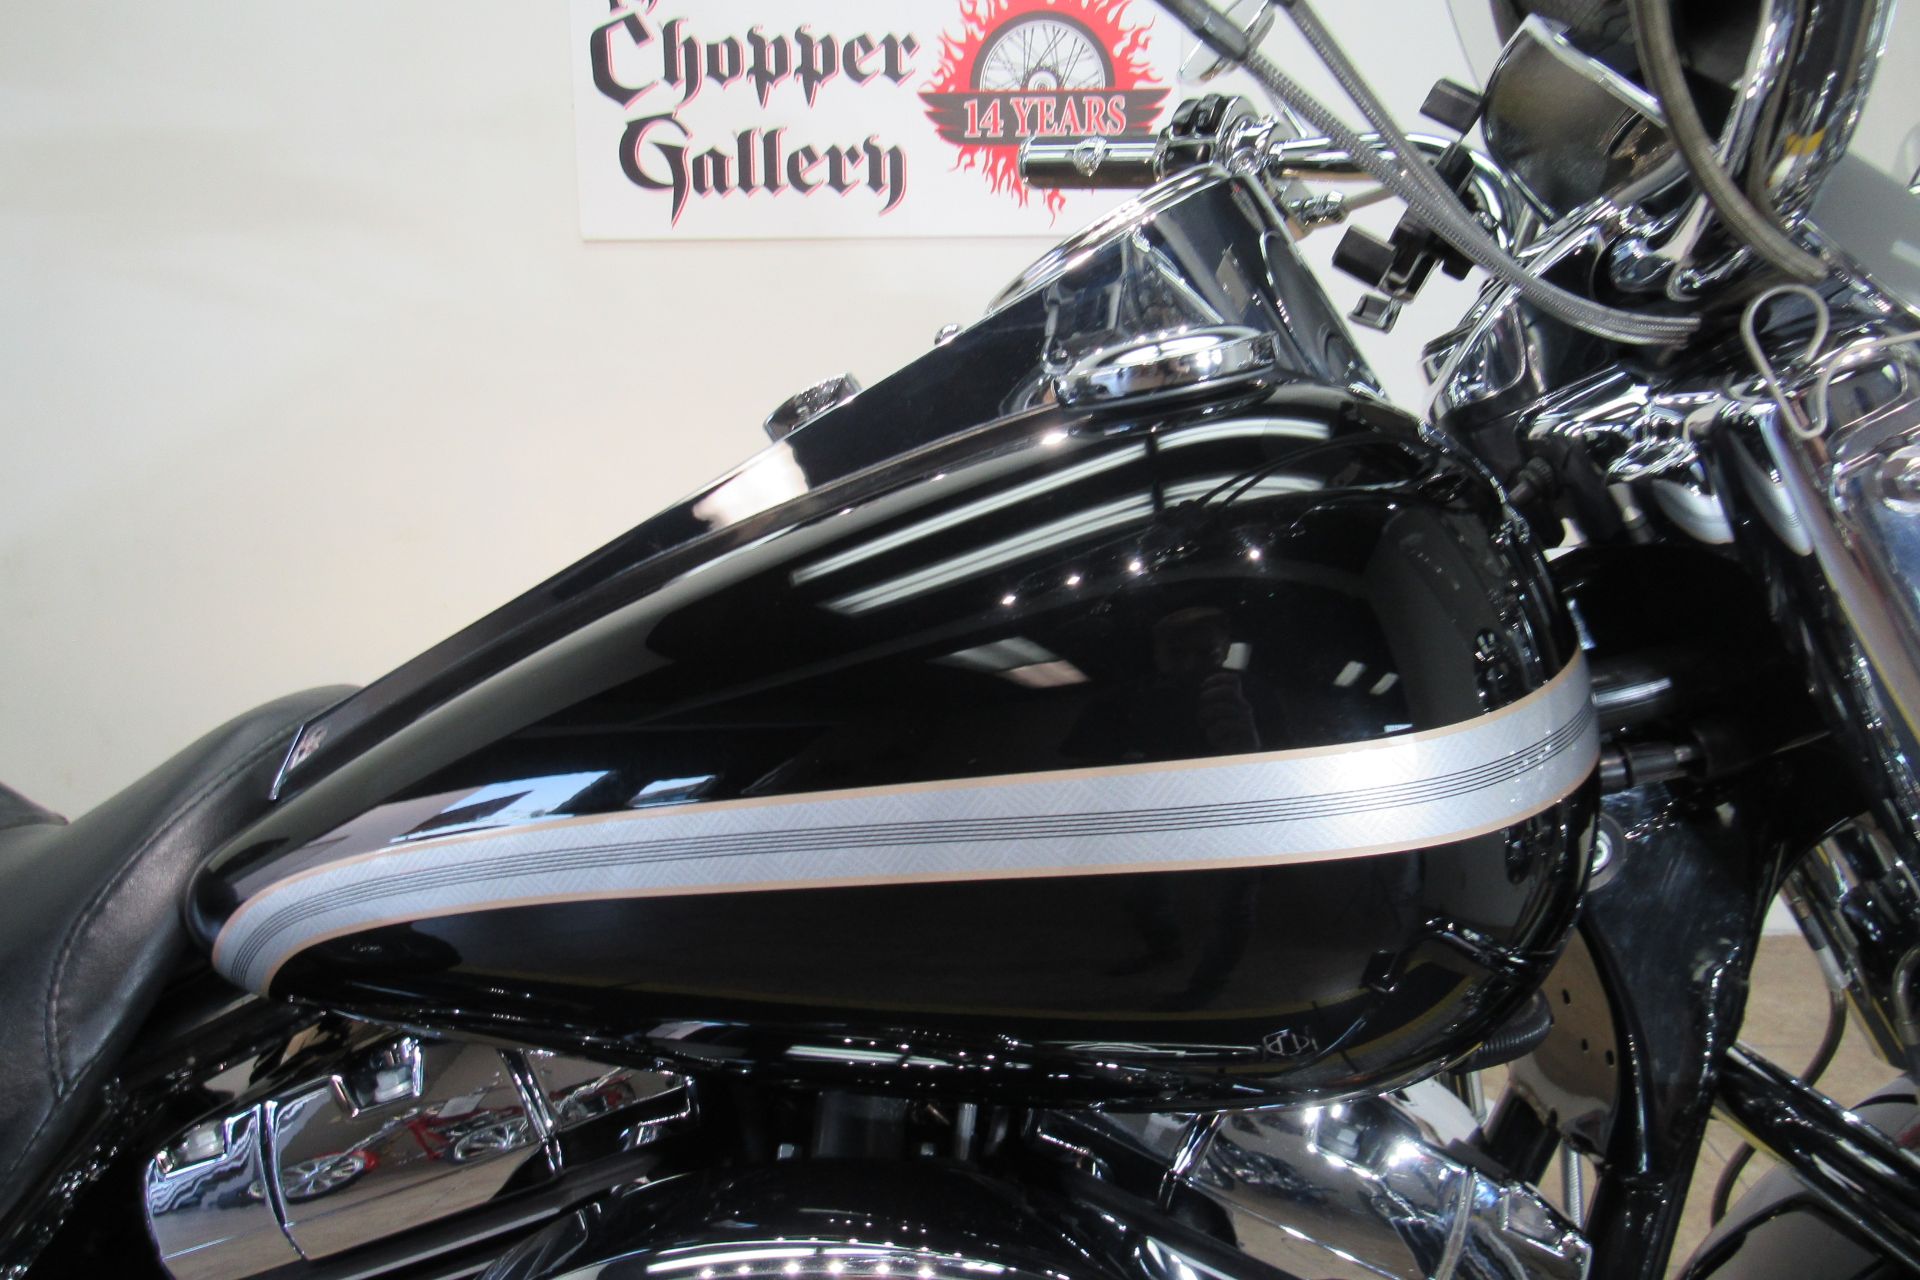 2003 Harley-Davidson Road King Classic in Temecula, California - Photo 7